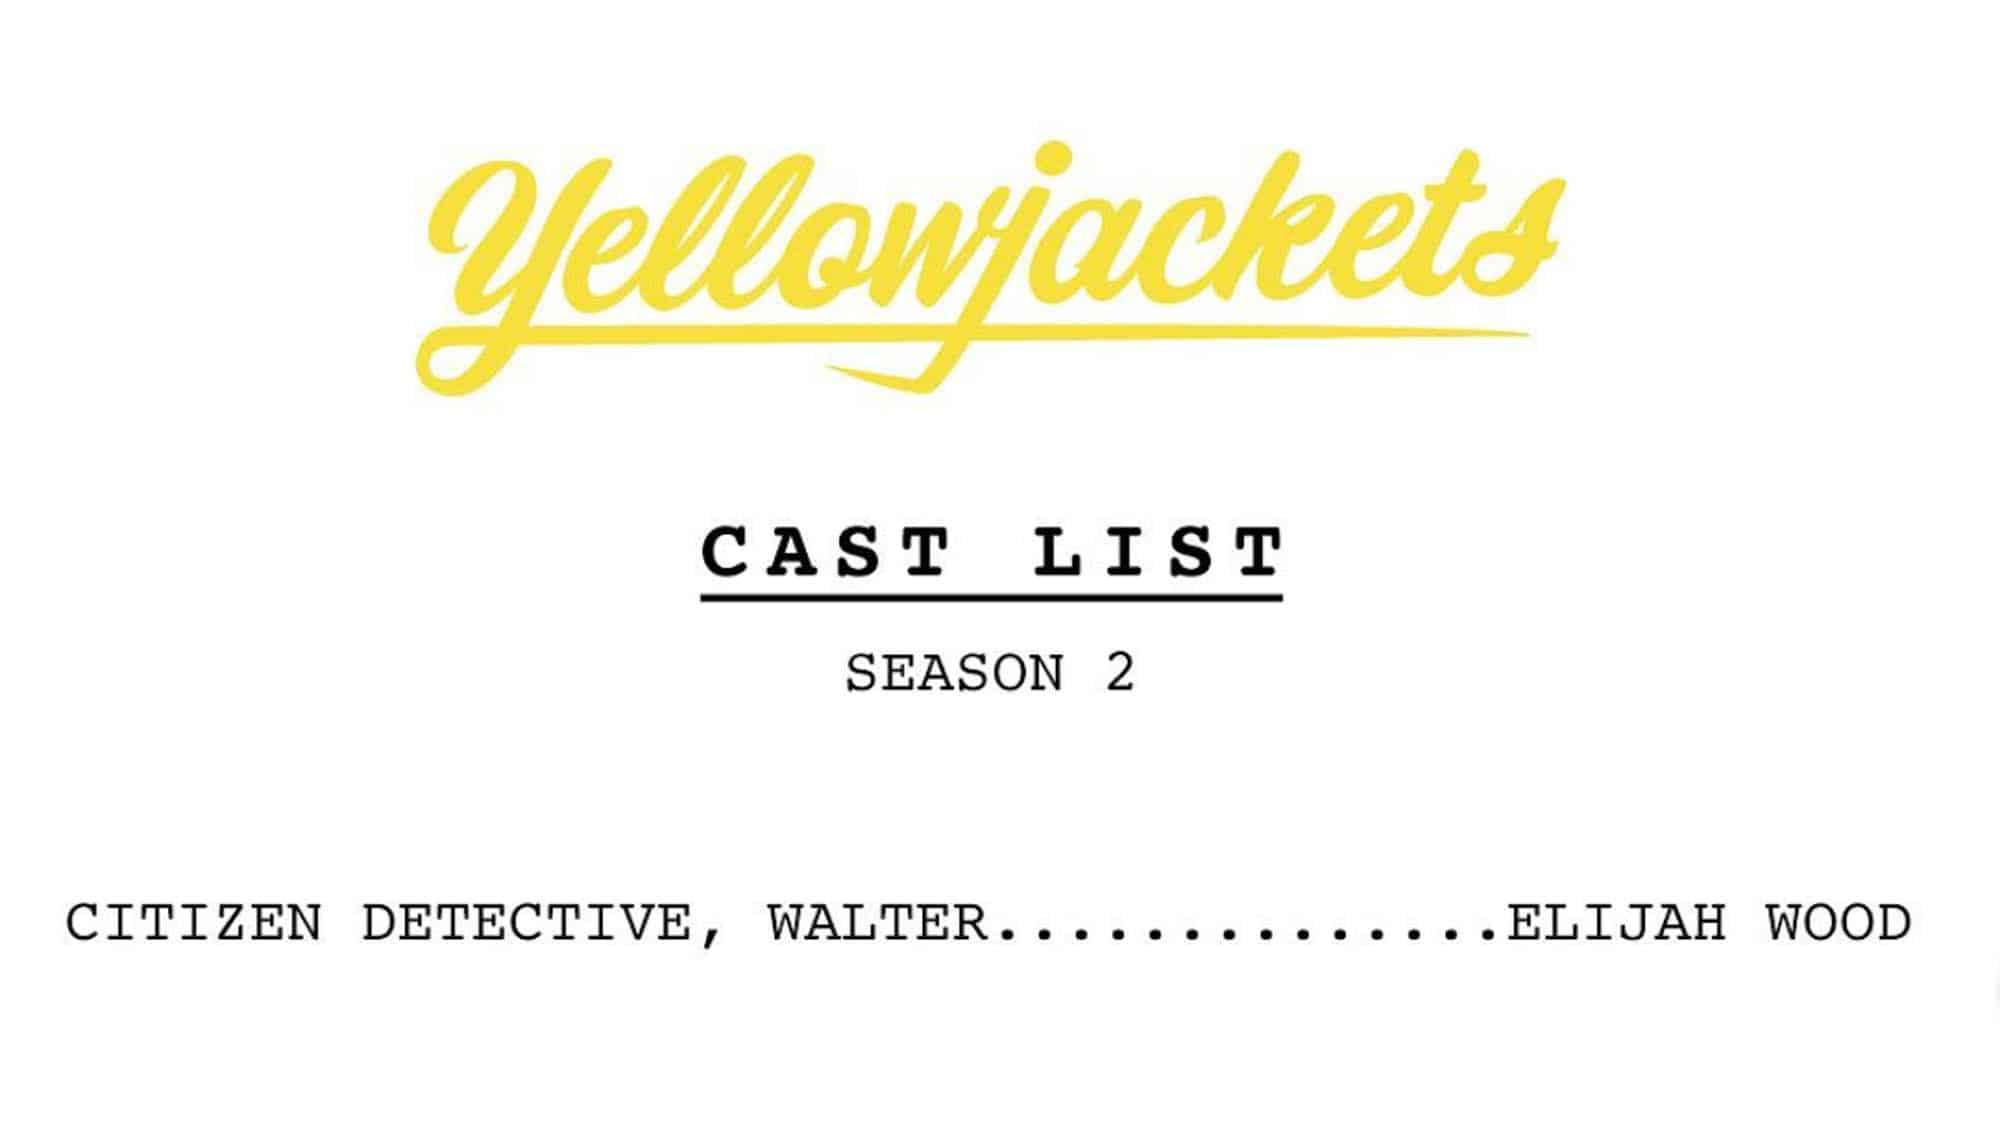 Yellowjackets season 2 citizen detective walter elijah wood